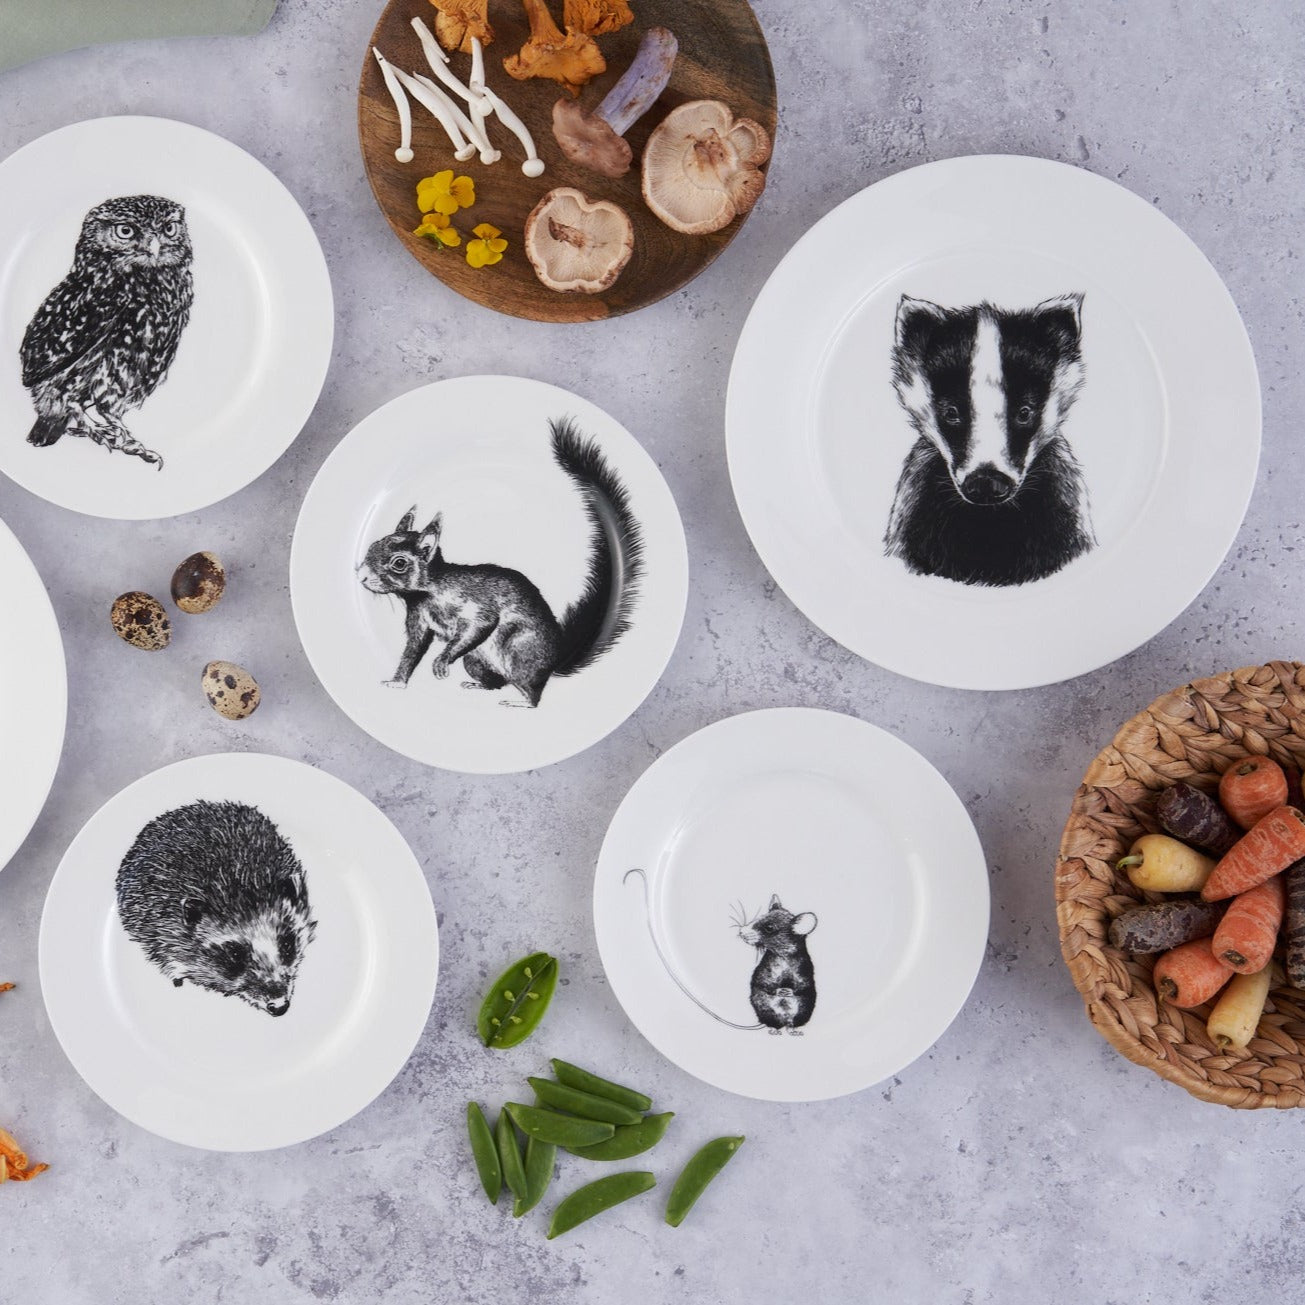 British Wildlife Collection - Badger dinner plate